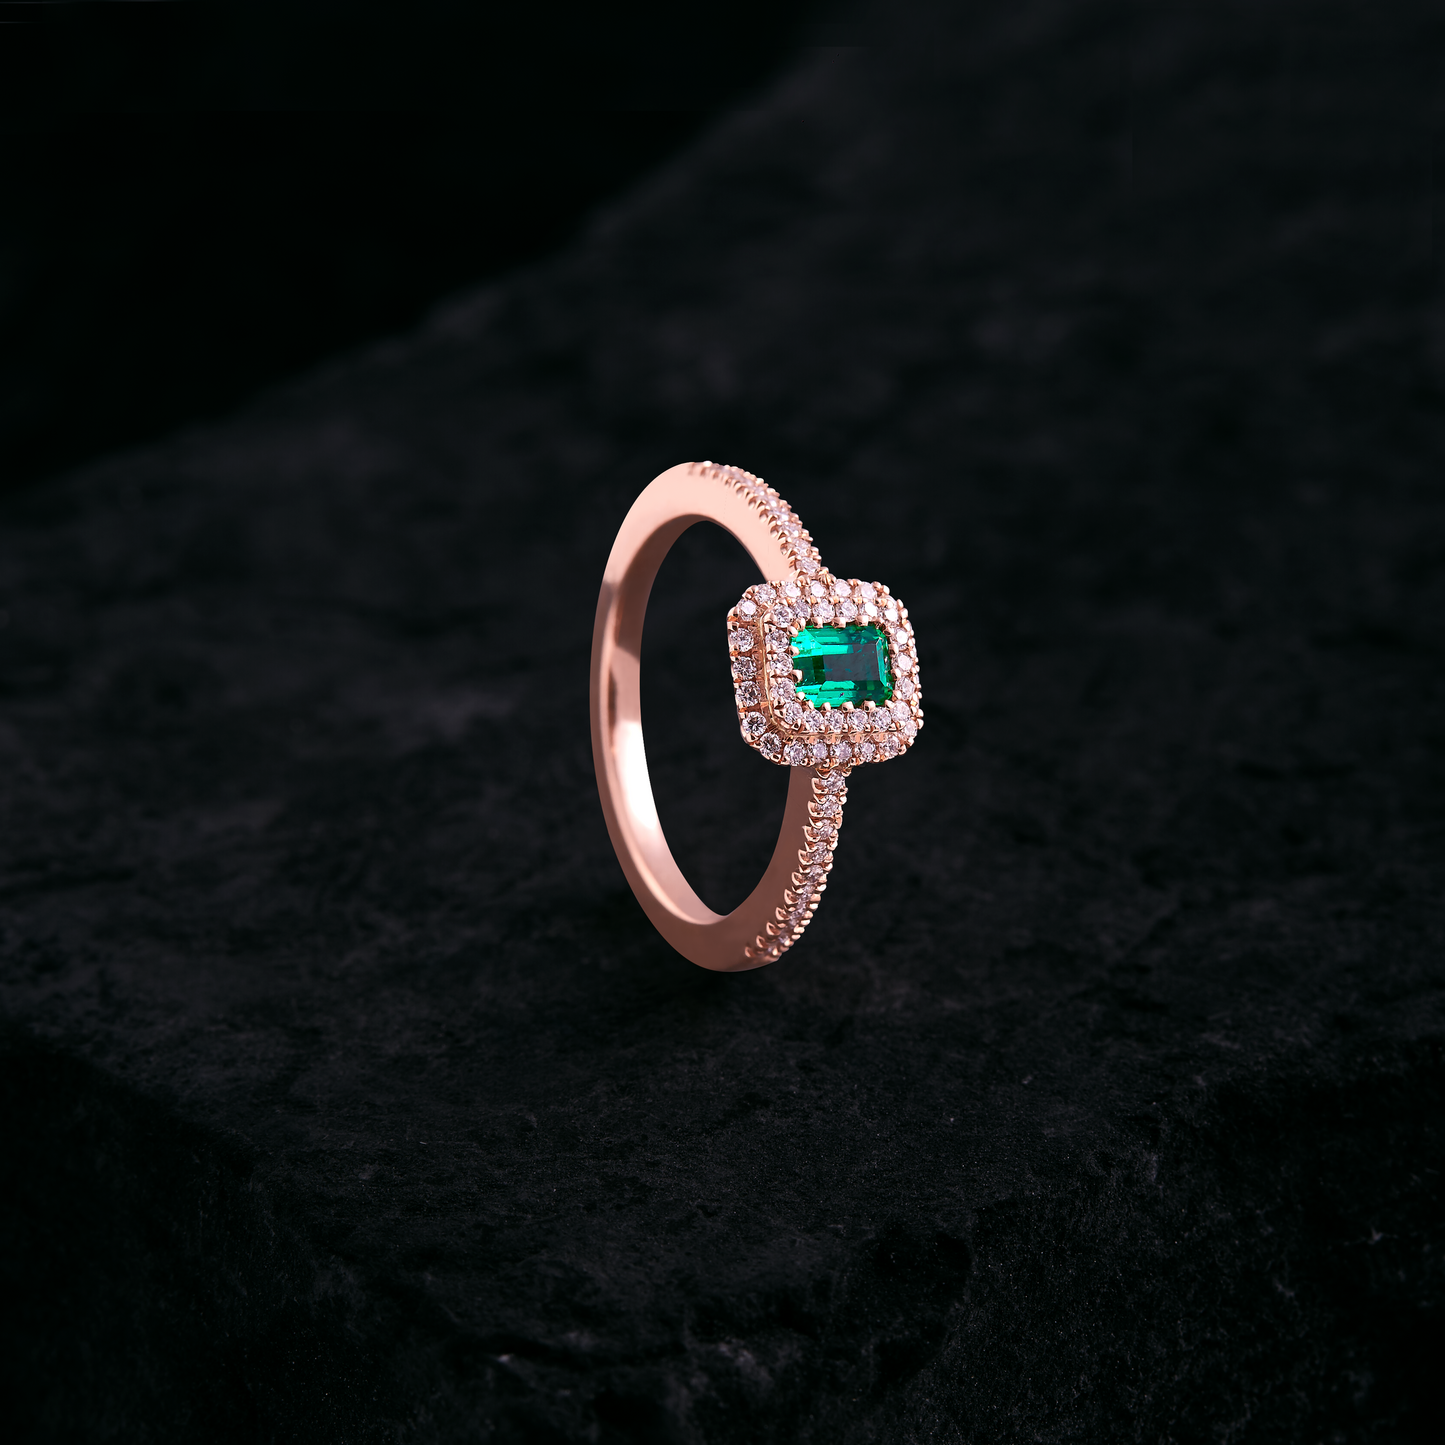 Radiance diamond ring